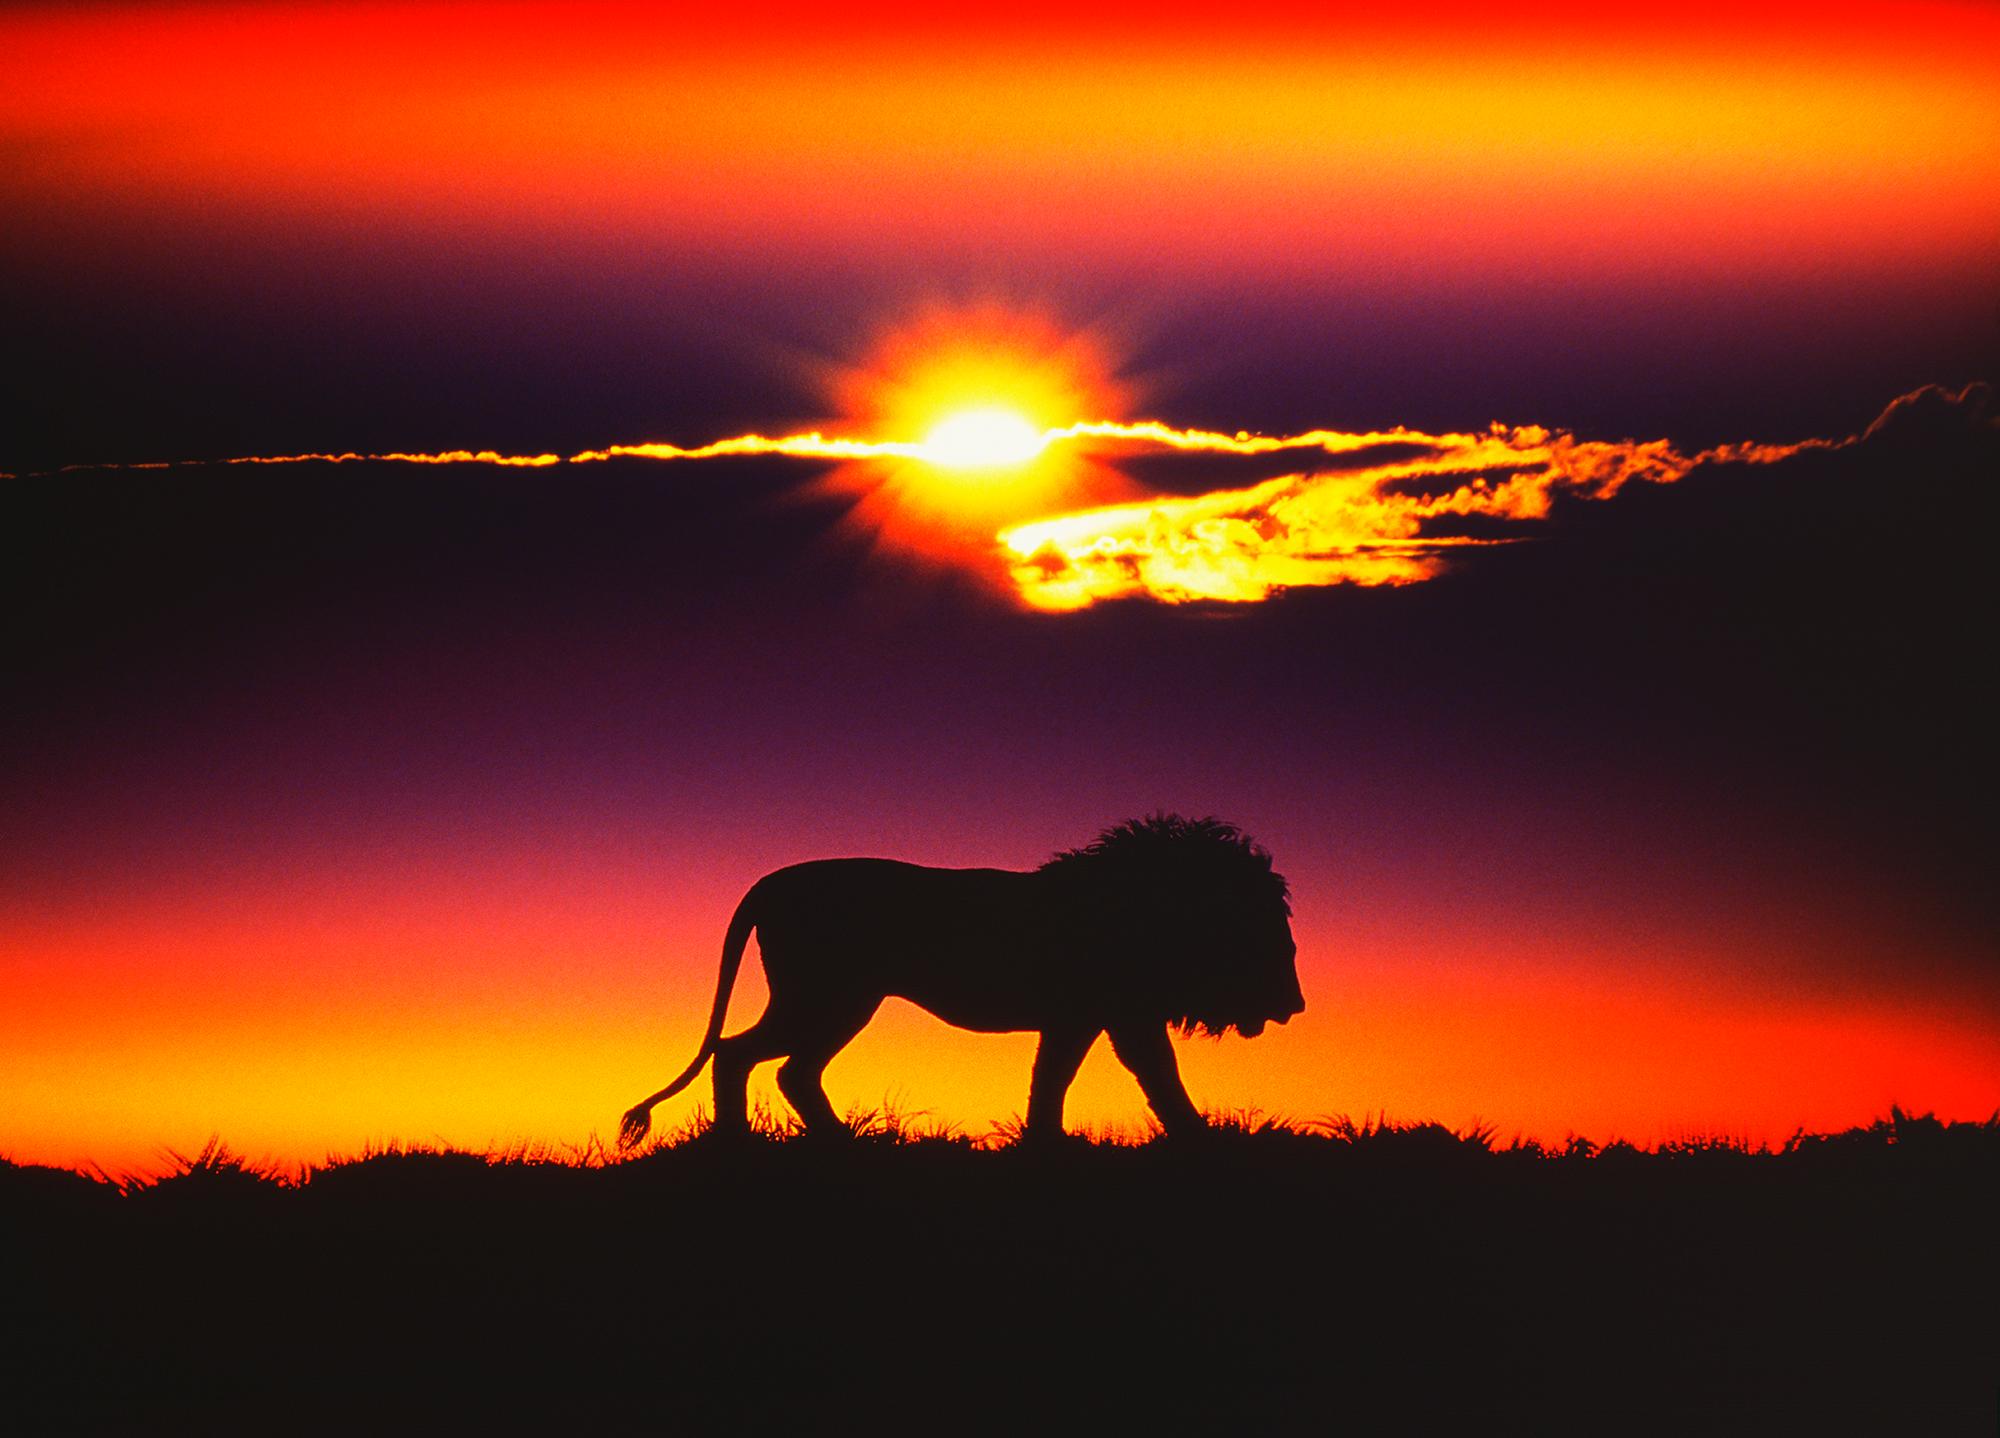 Der edle Löwe am Sonnenuntergang